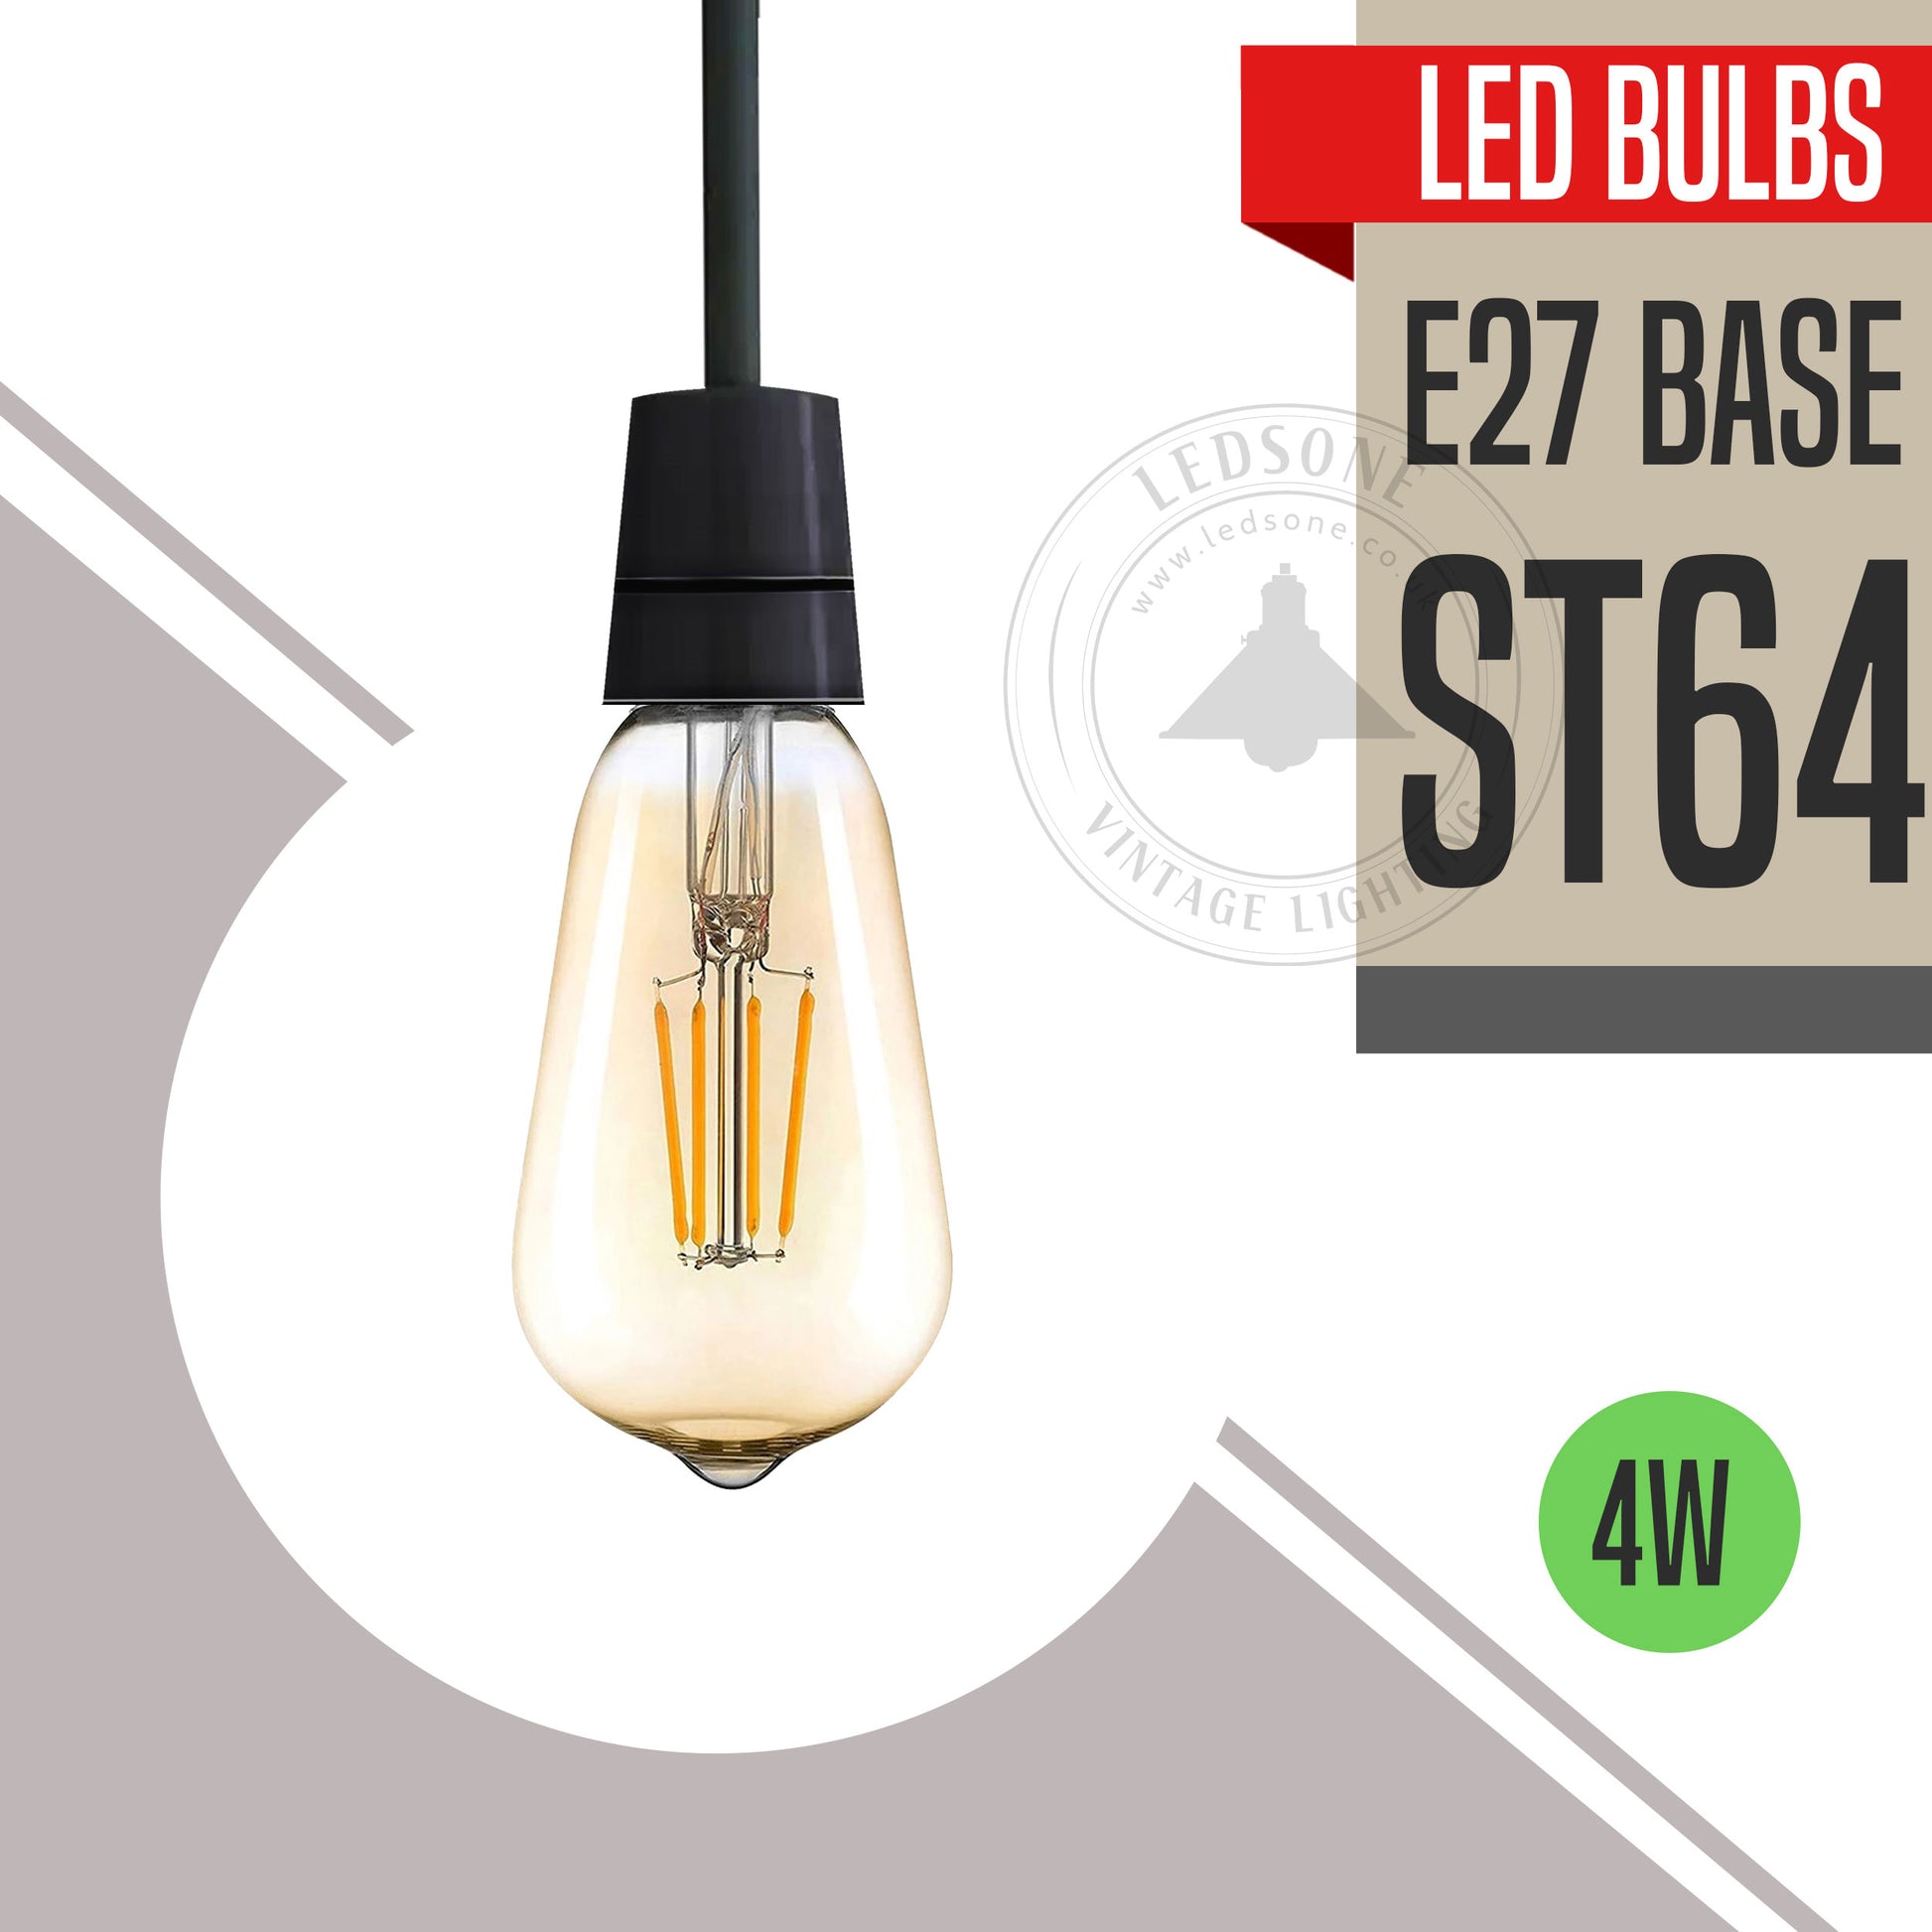 Industrial ST64, 4W, E27 Bulb